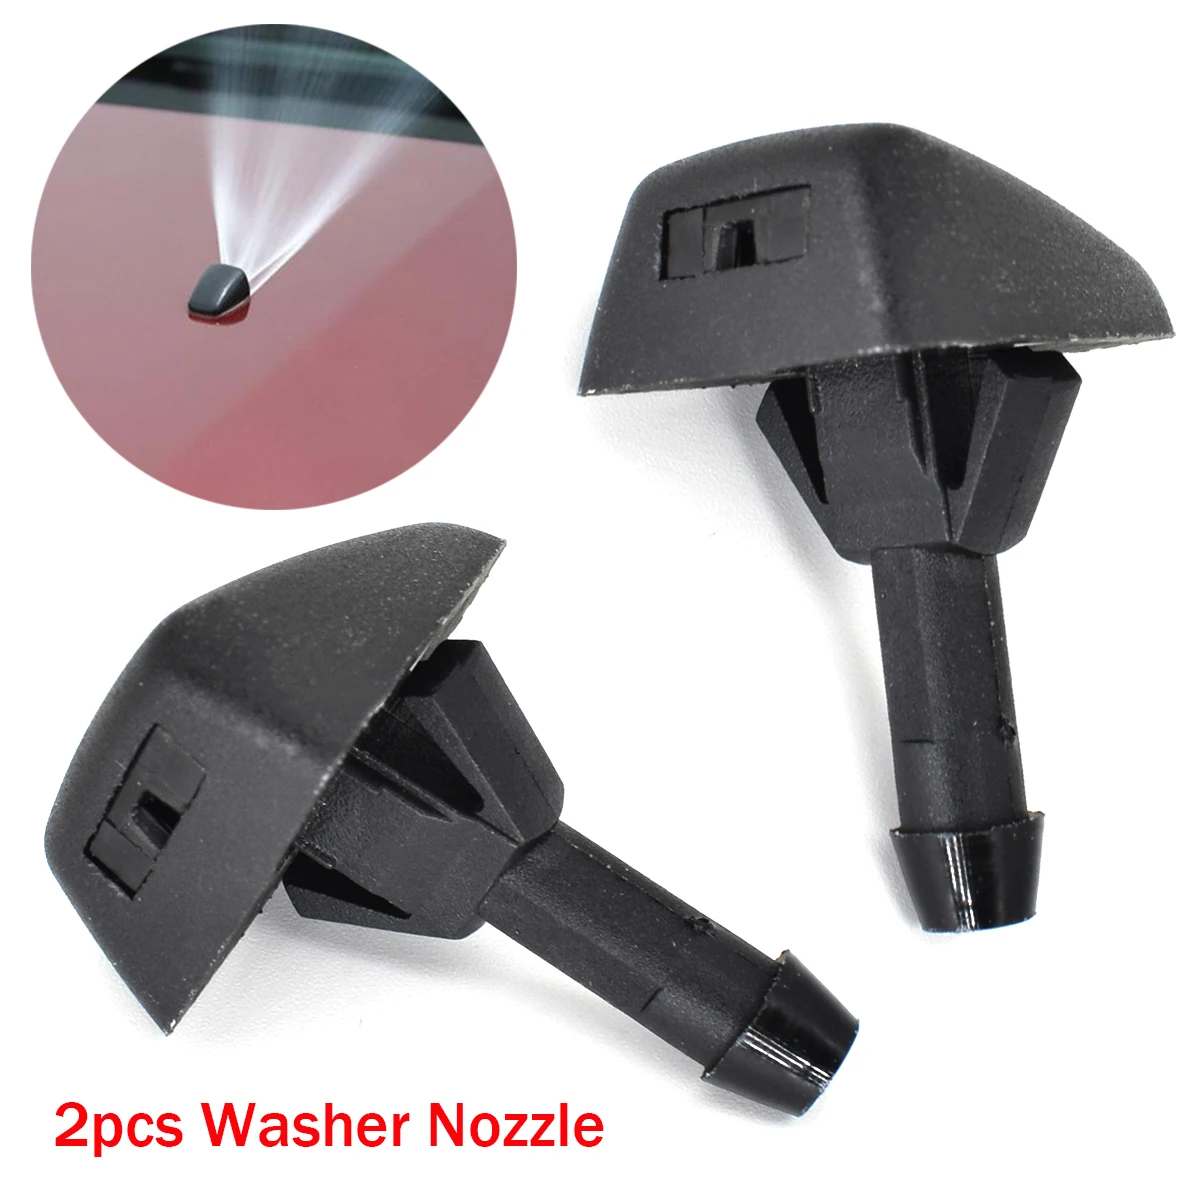 2x Front Windshield Wiper Washer Nozzle Spray Jet For Volvo C30 V40 S40 V50 C70 S70 S80 XC70 XC90 30655605 7845009 Water Nozzles